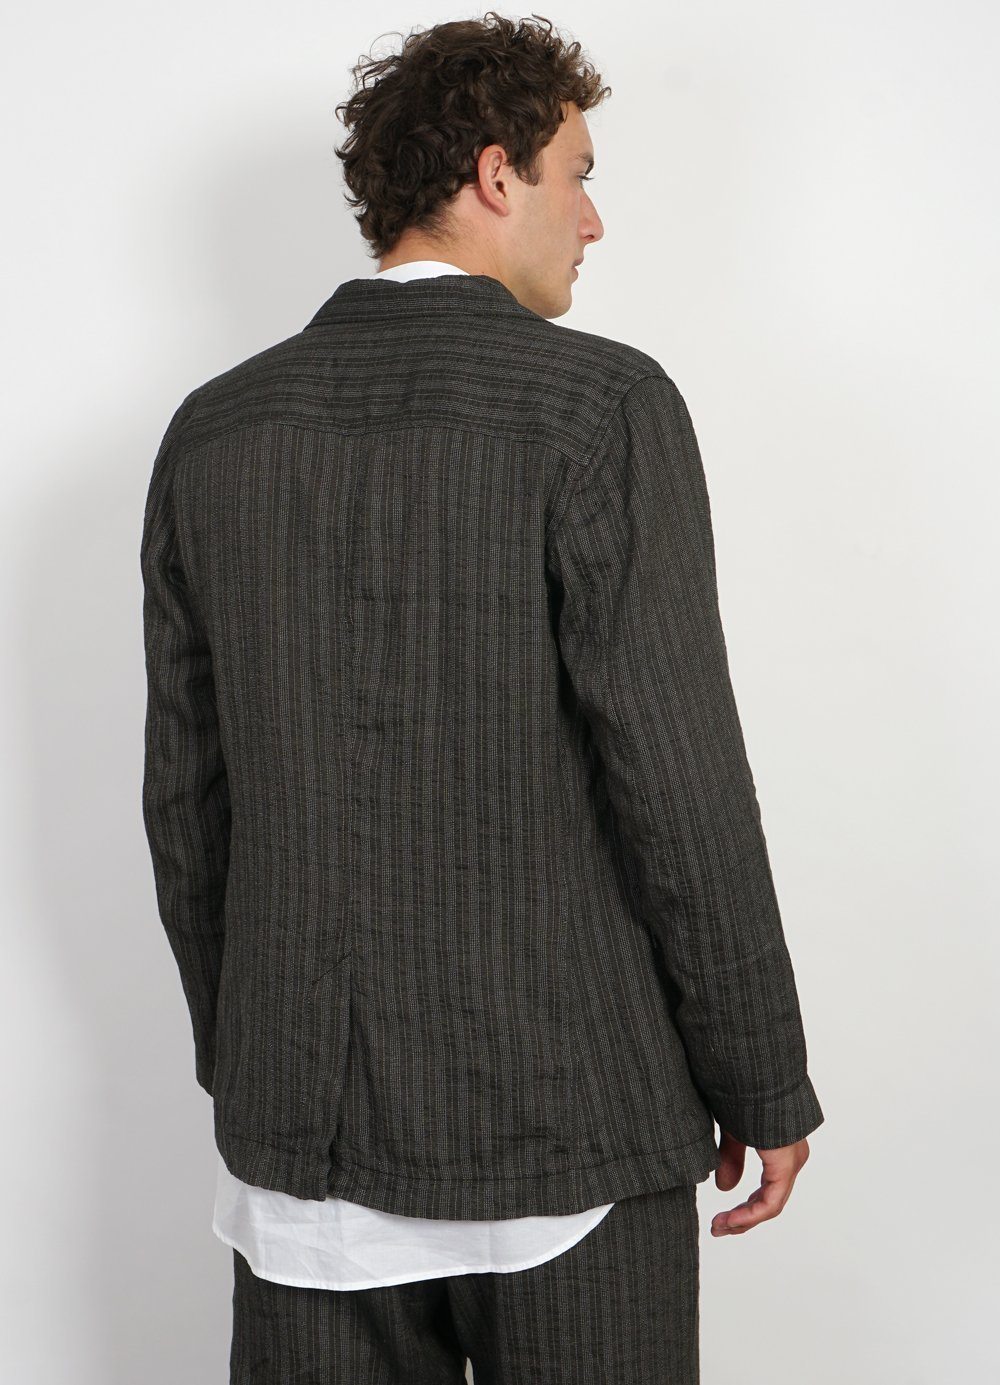 JOHANNES | Casual Blazer Jacket | Taupe Stripes -HANSEN Garments- HANSEN Garments